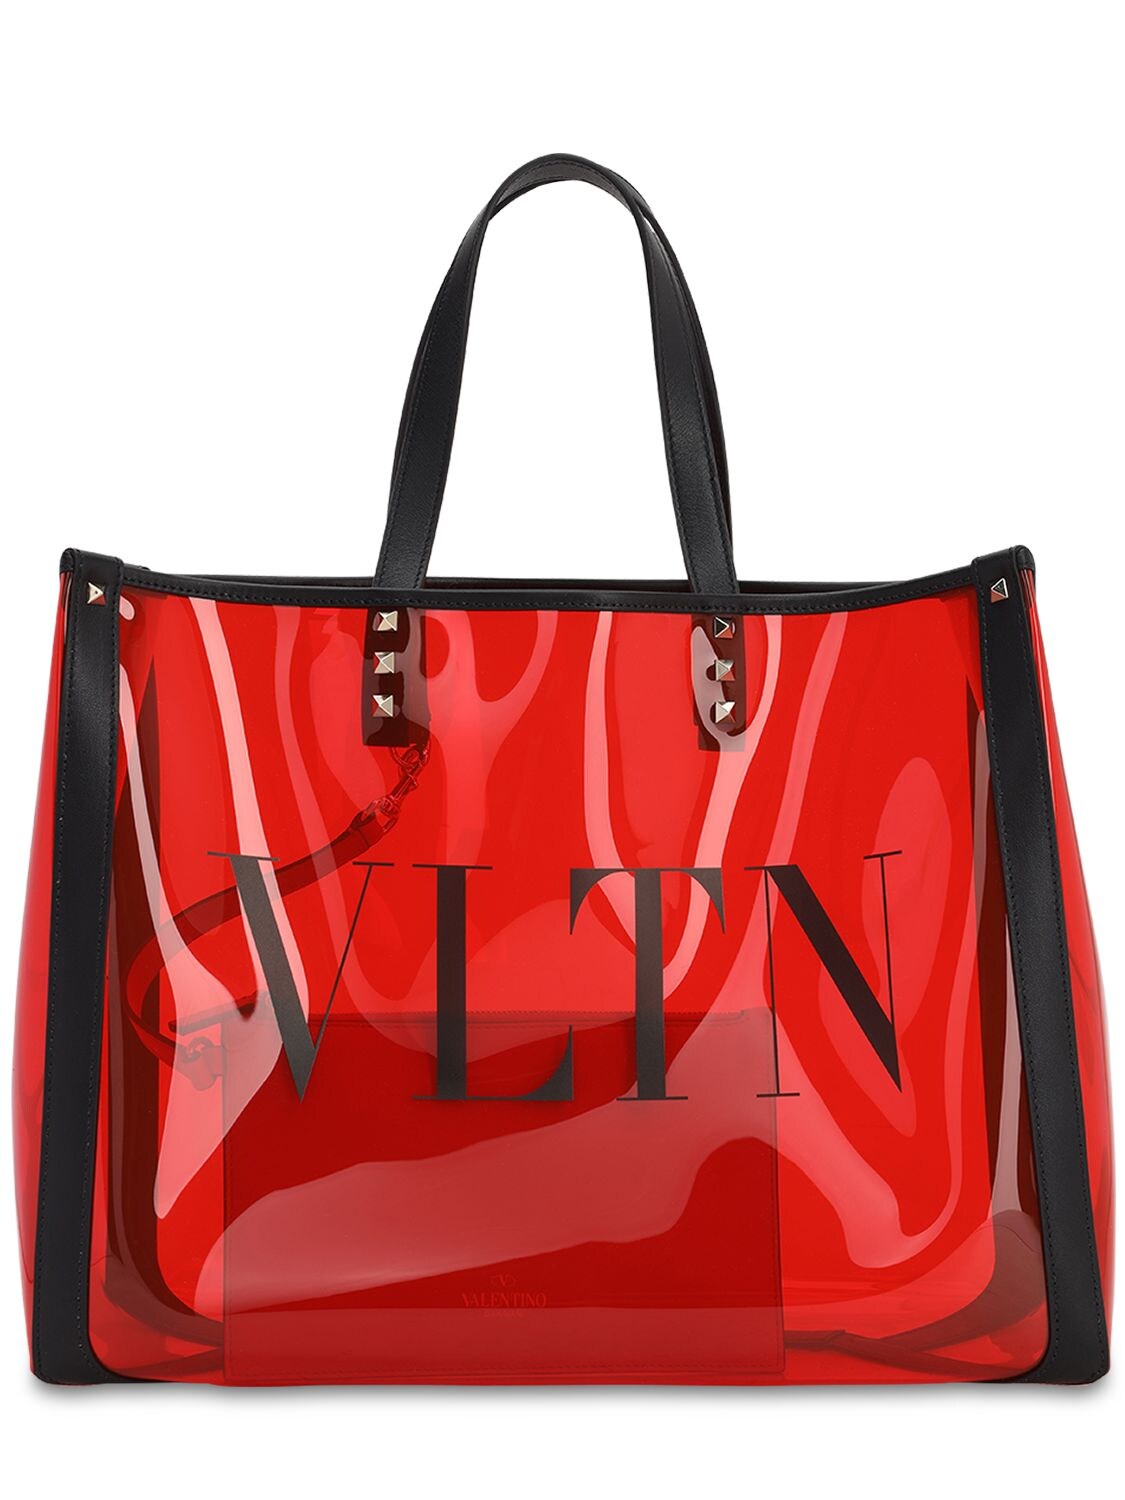 Valentino Garavani Logo Tote Bag W/ Leather Details In Rouge Pur